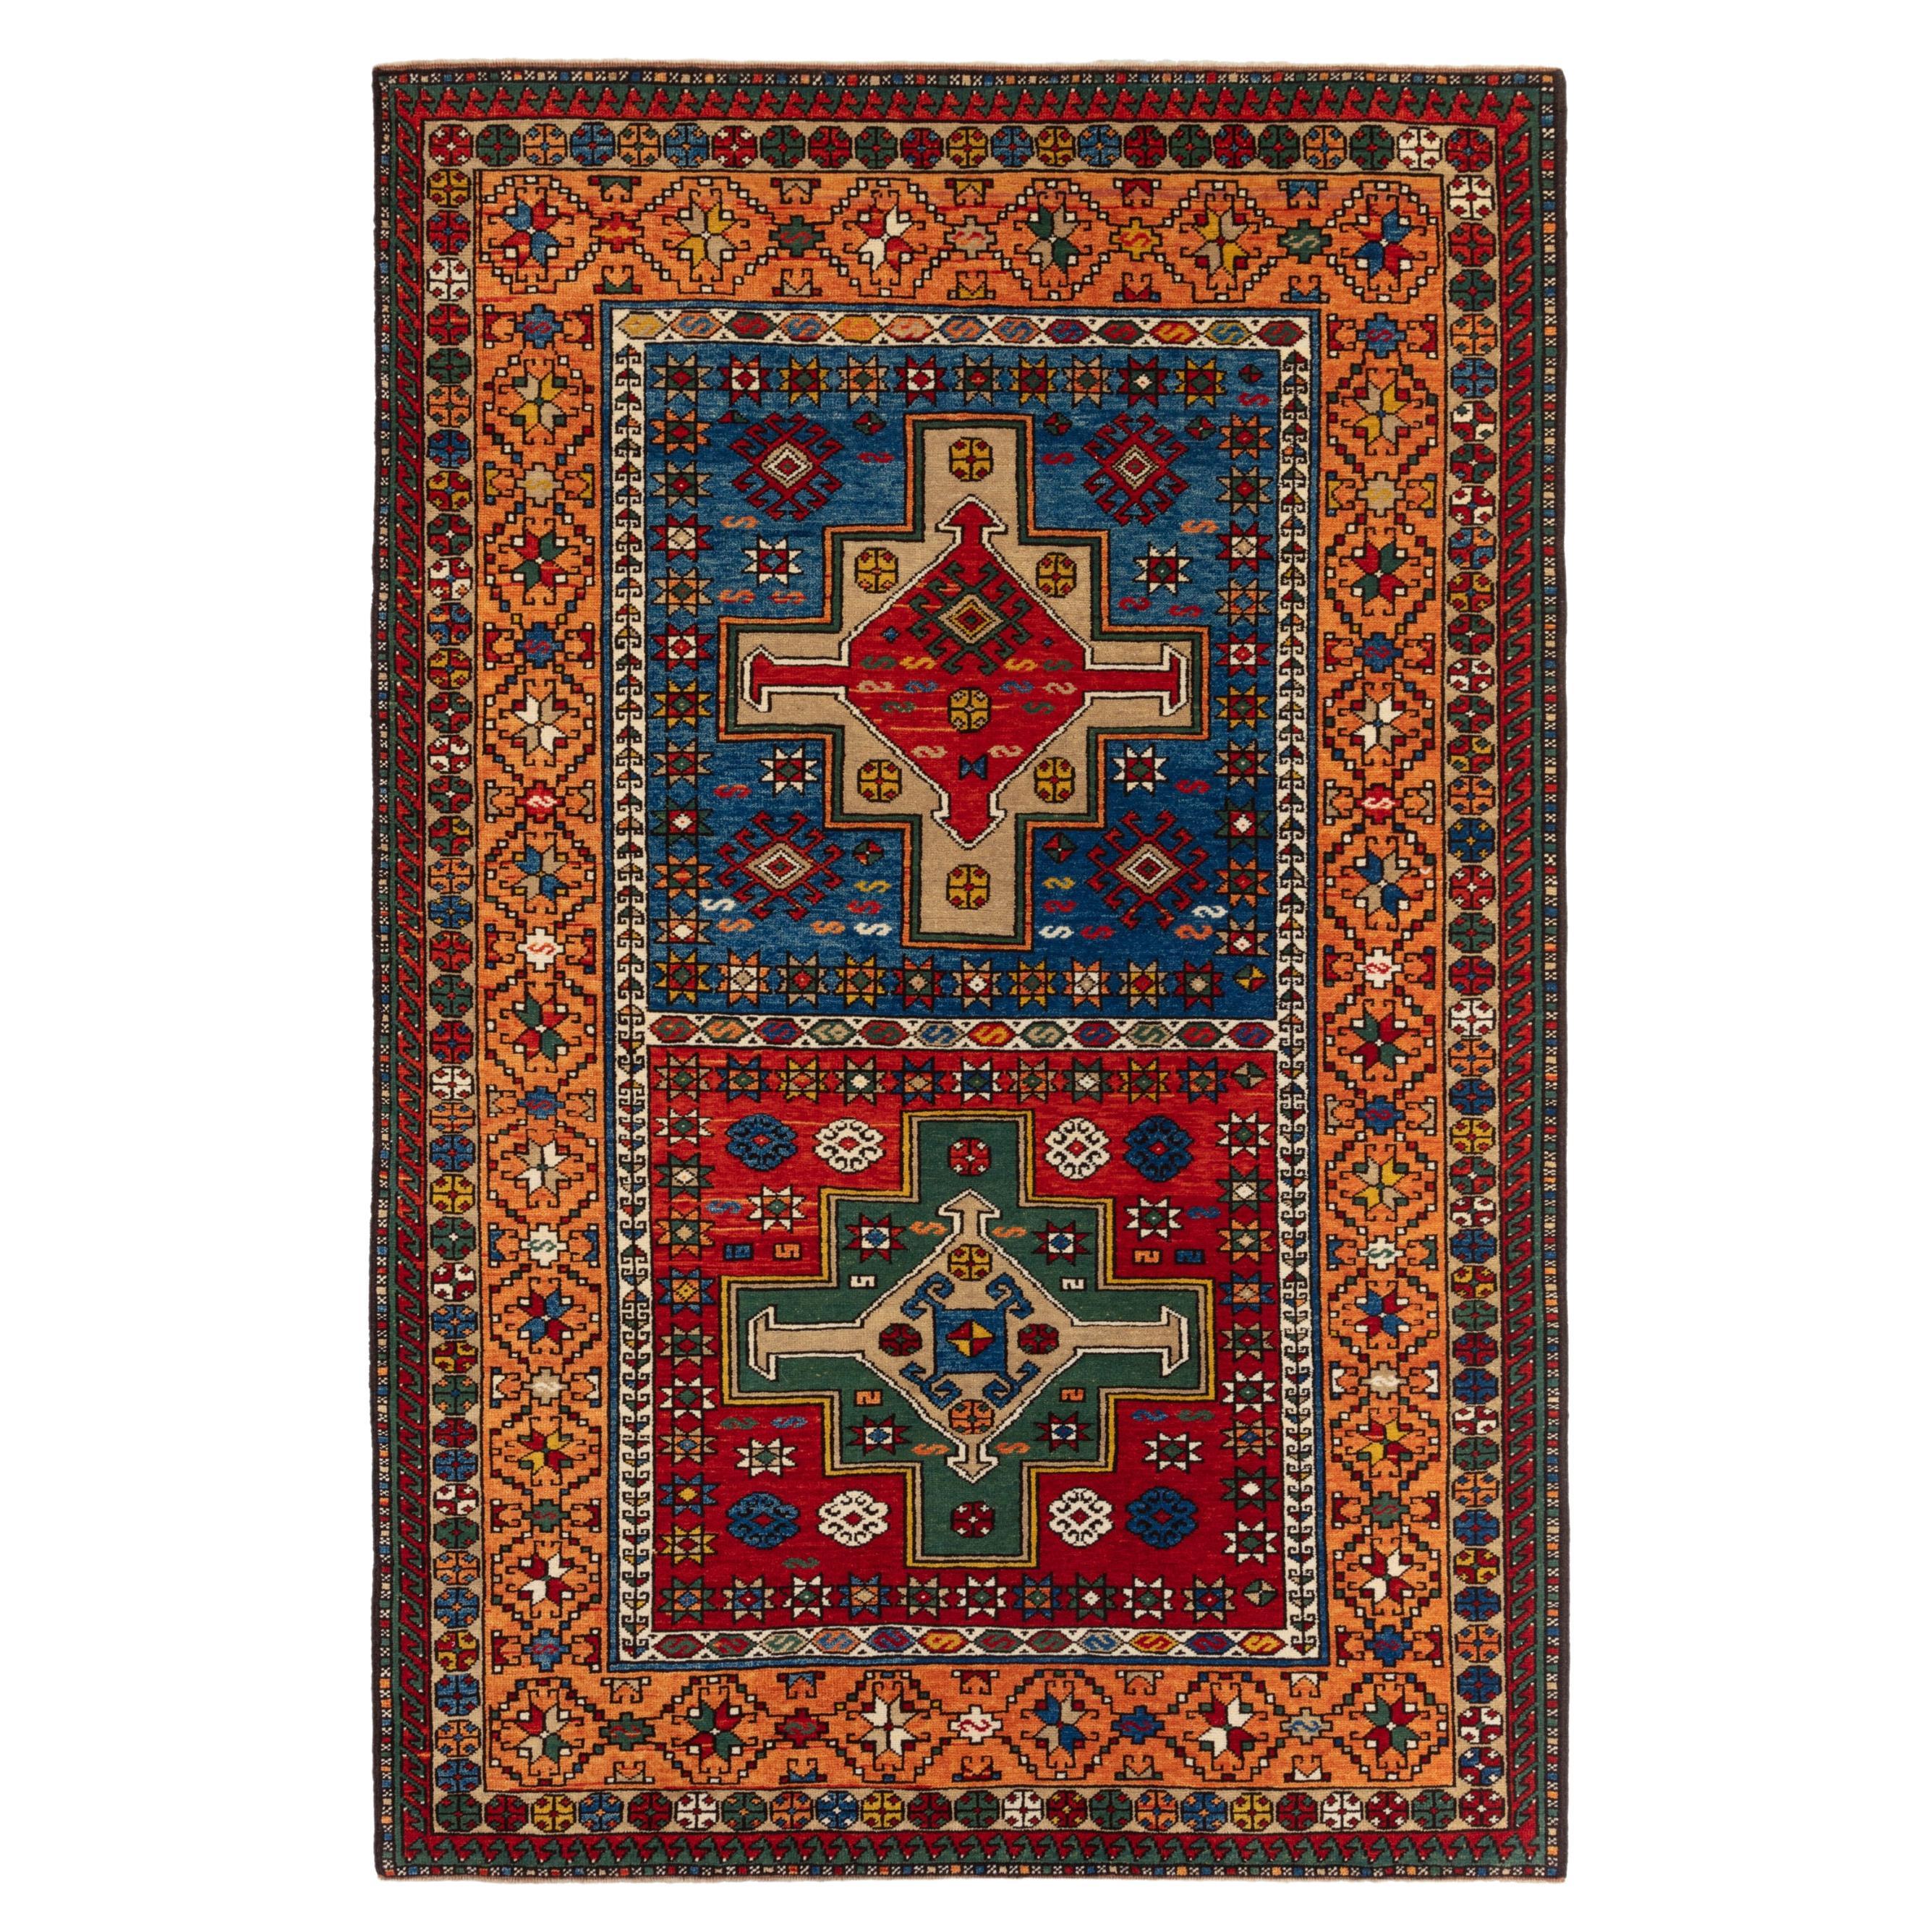 Ararat Rugs Two Medallions Kagizman Kazak Rug Antique Revival Carpet Natural Dye (tapis à deux médaillons Kagizman Kazak)